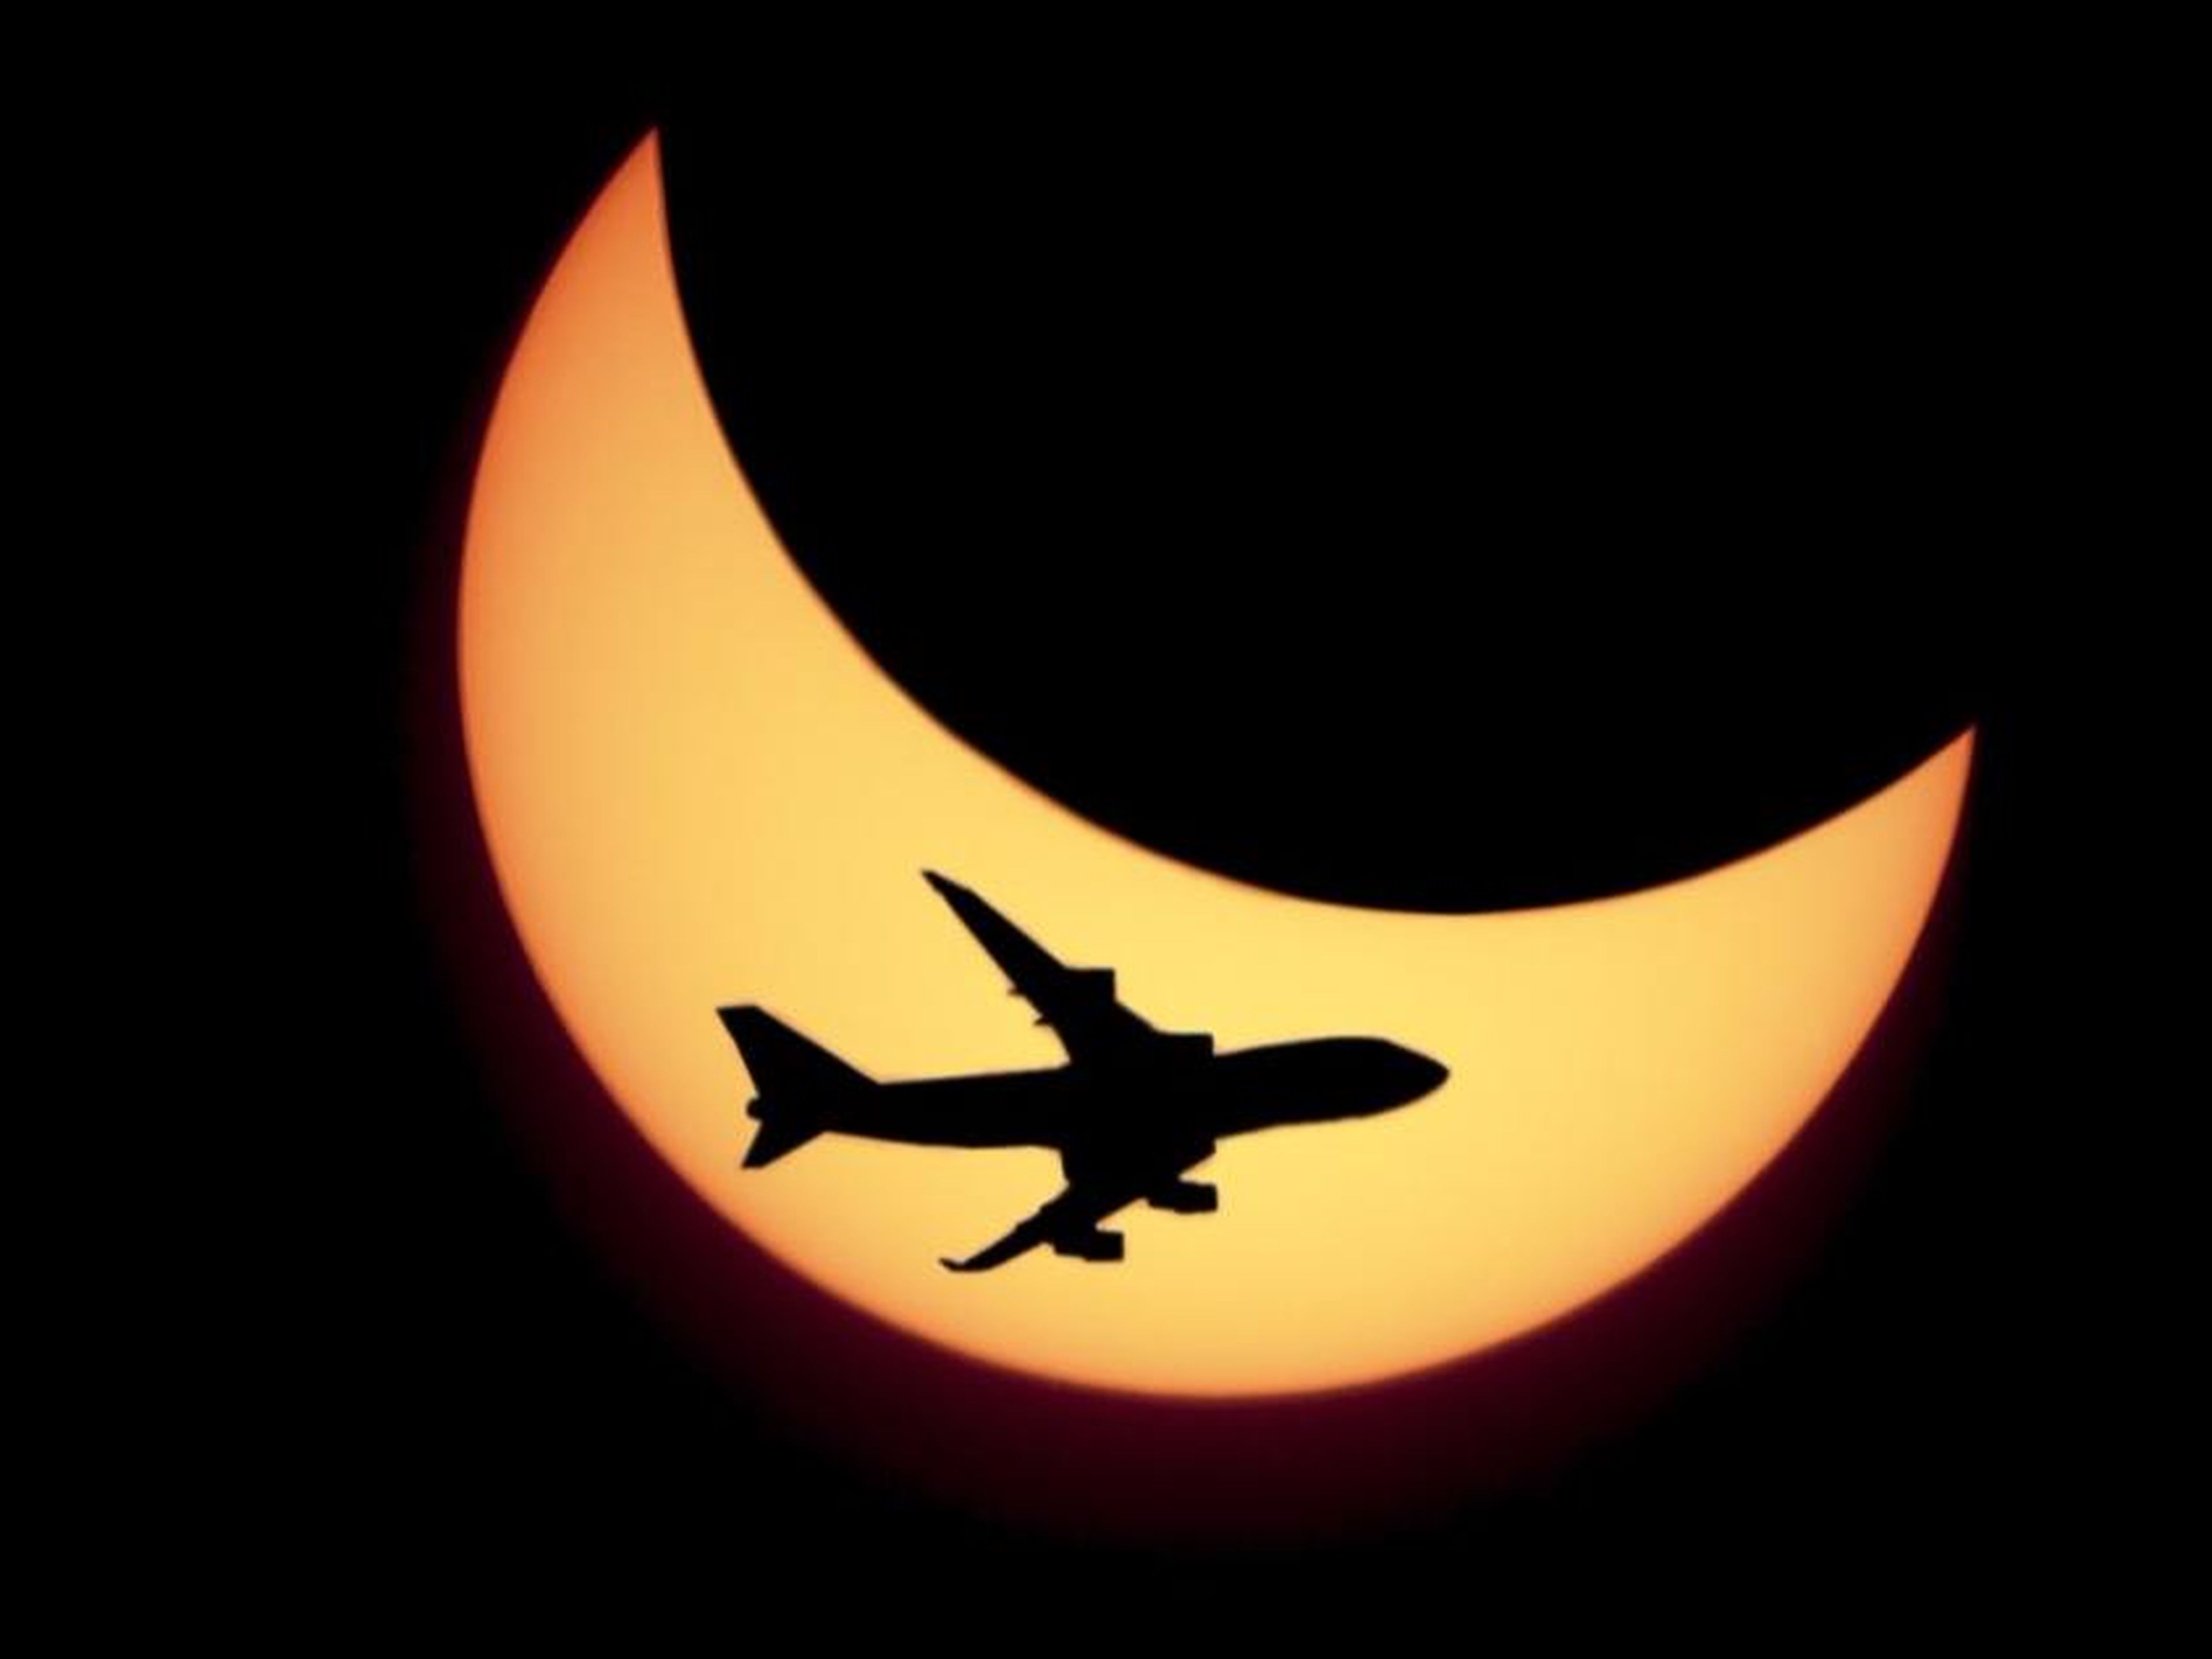 Un avión sobrevuela un eclipse solar.